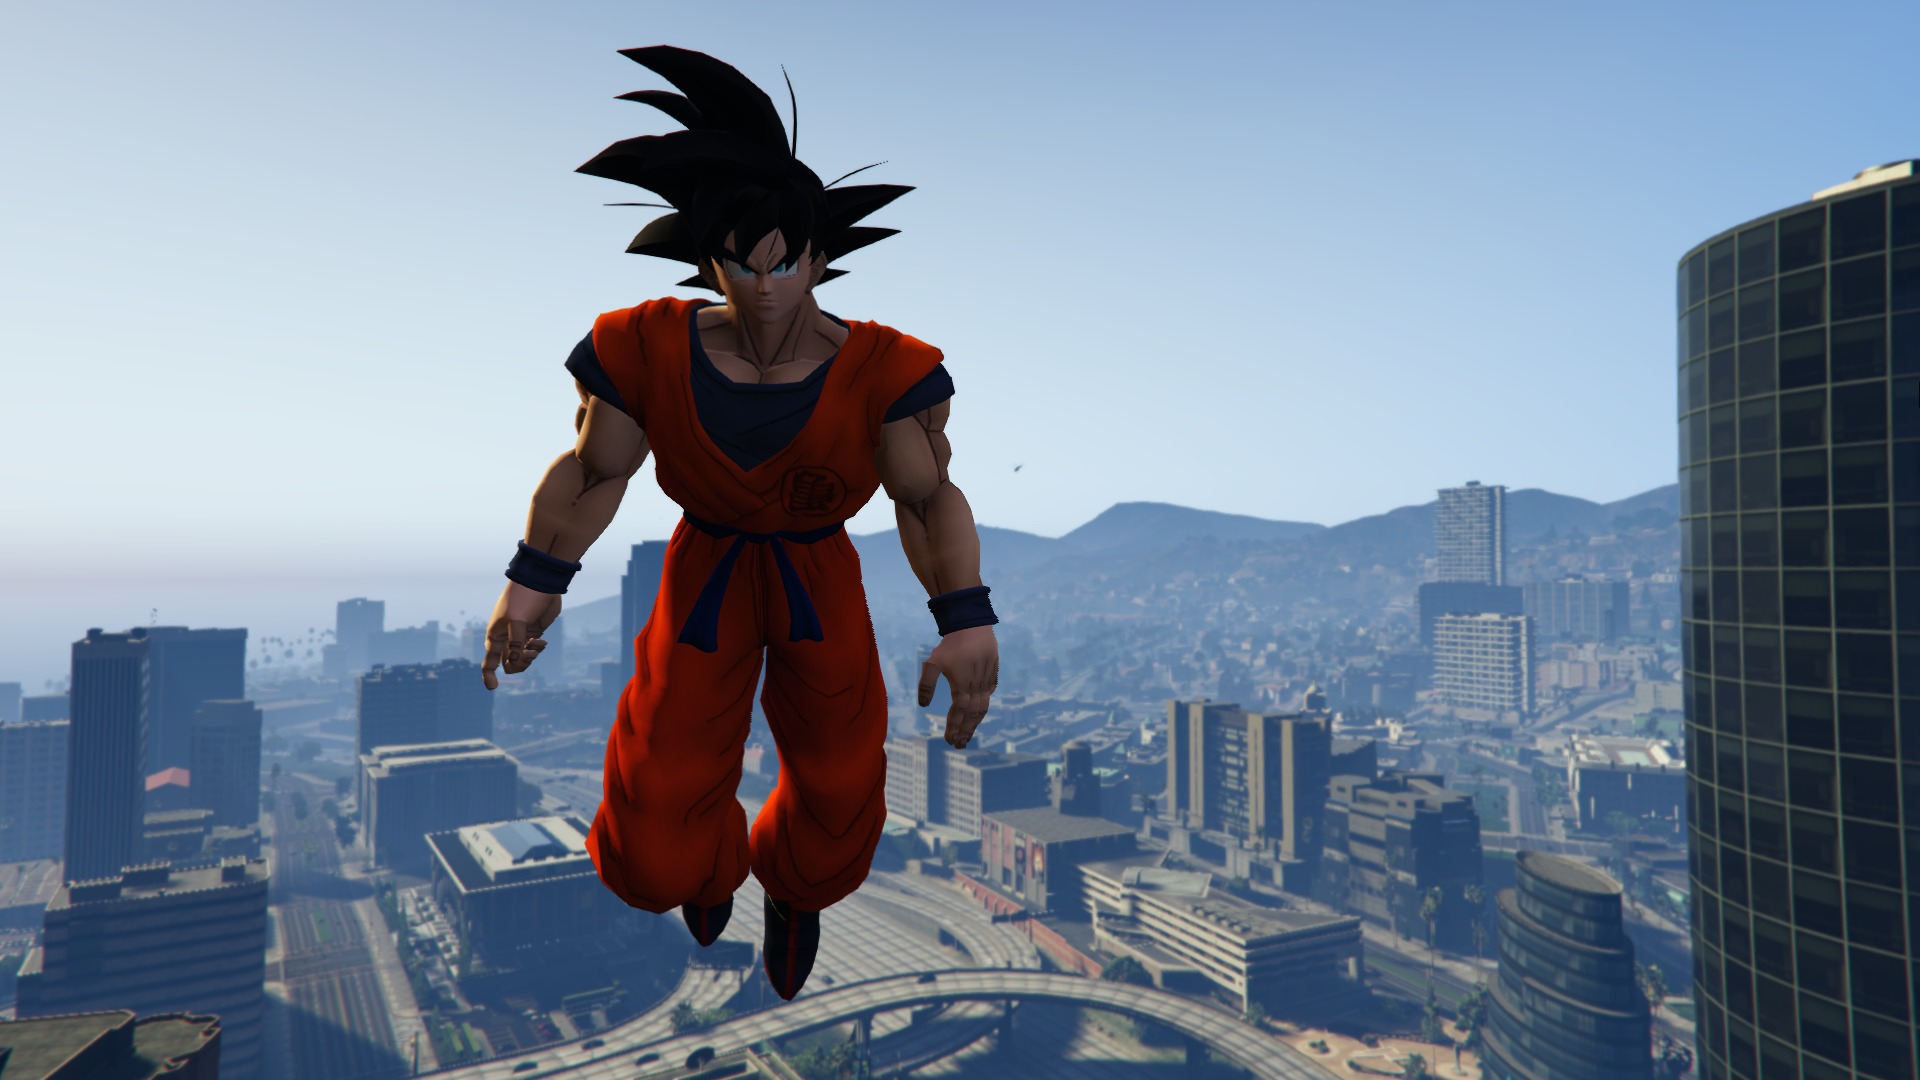 Modder Brings Goku to Grand Theft Auto V - HRK Newsroom